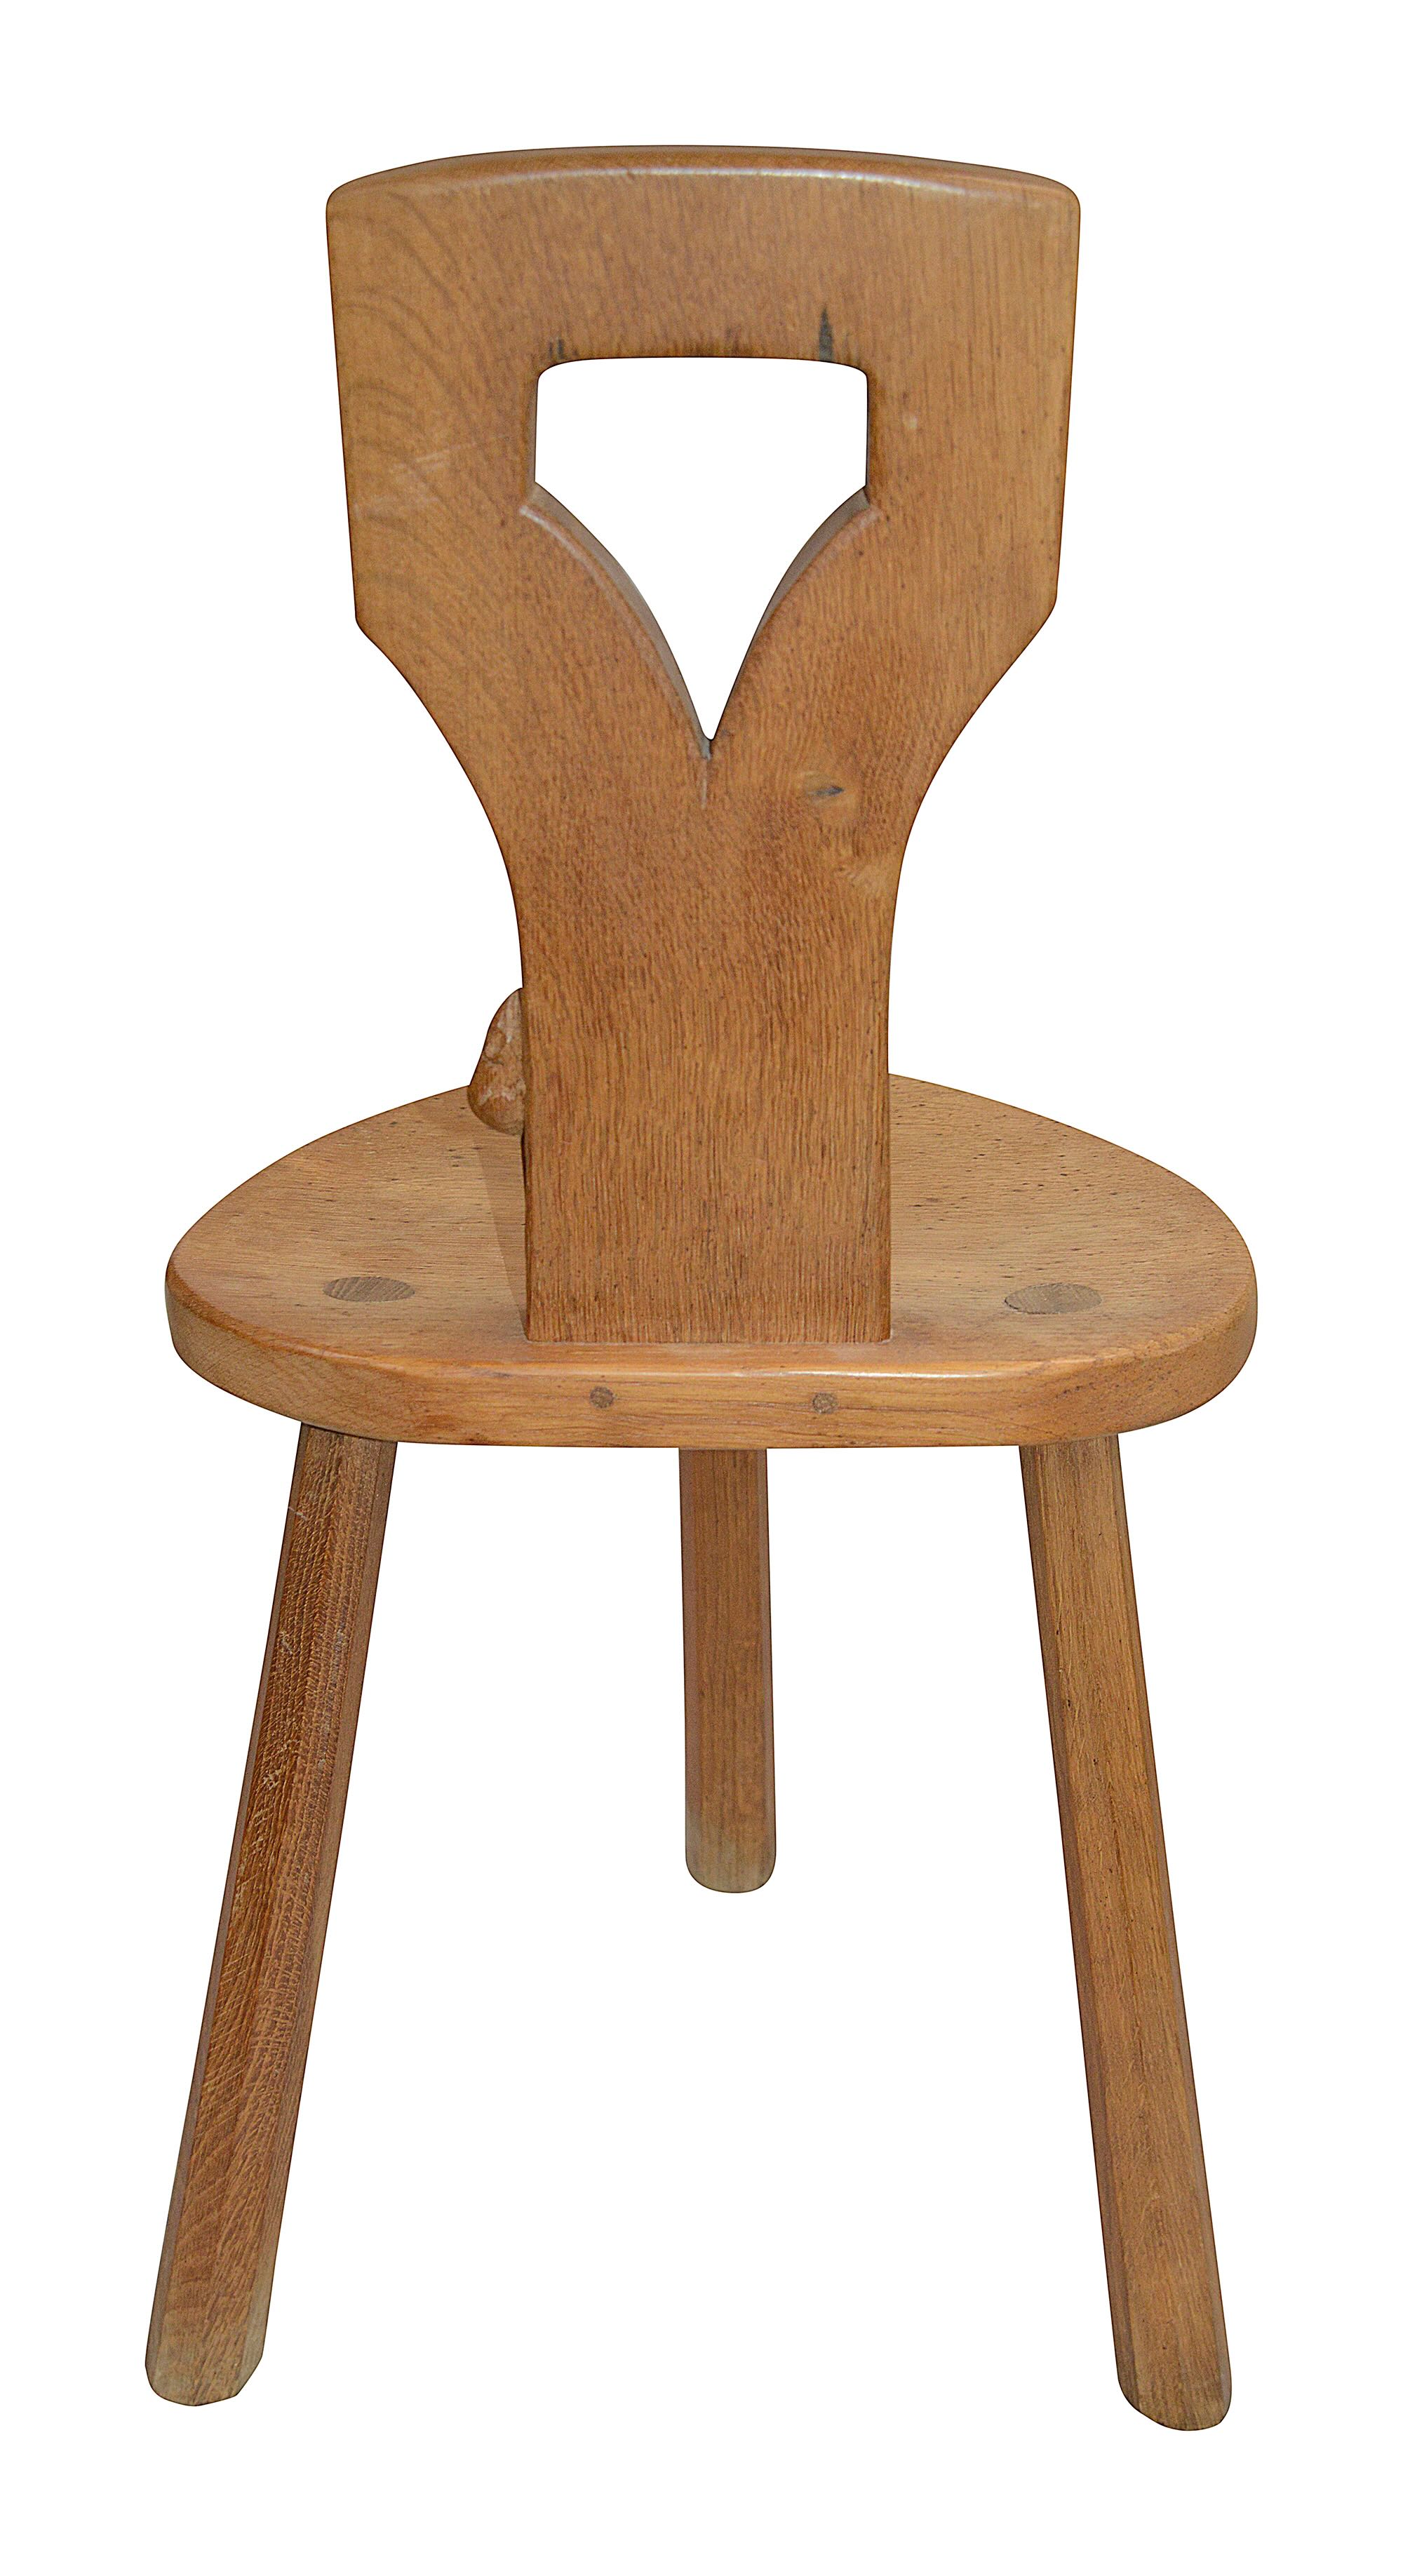 Robert 'Mouseman' Thompson. An oak spinning chair c.1970 - Image 3 of 3